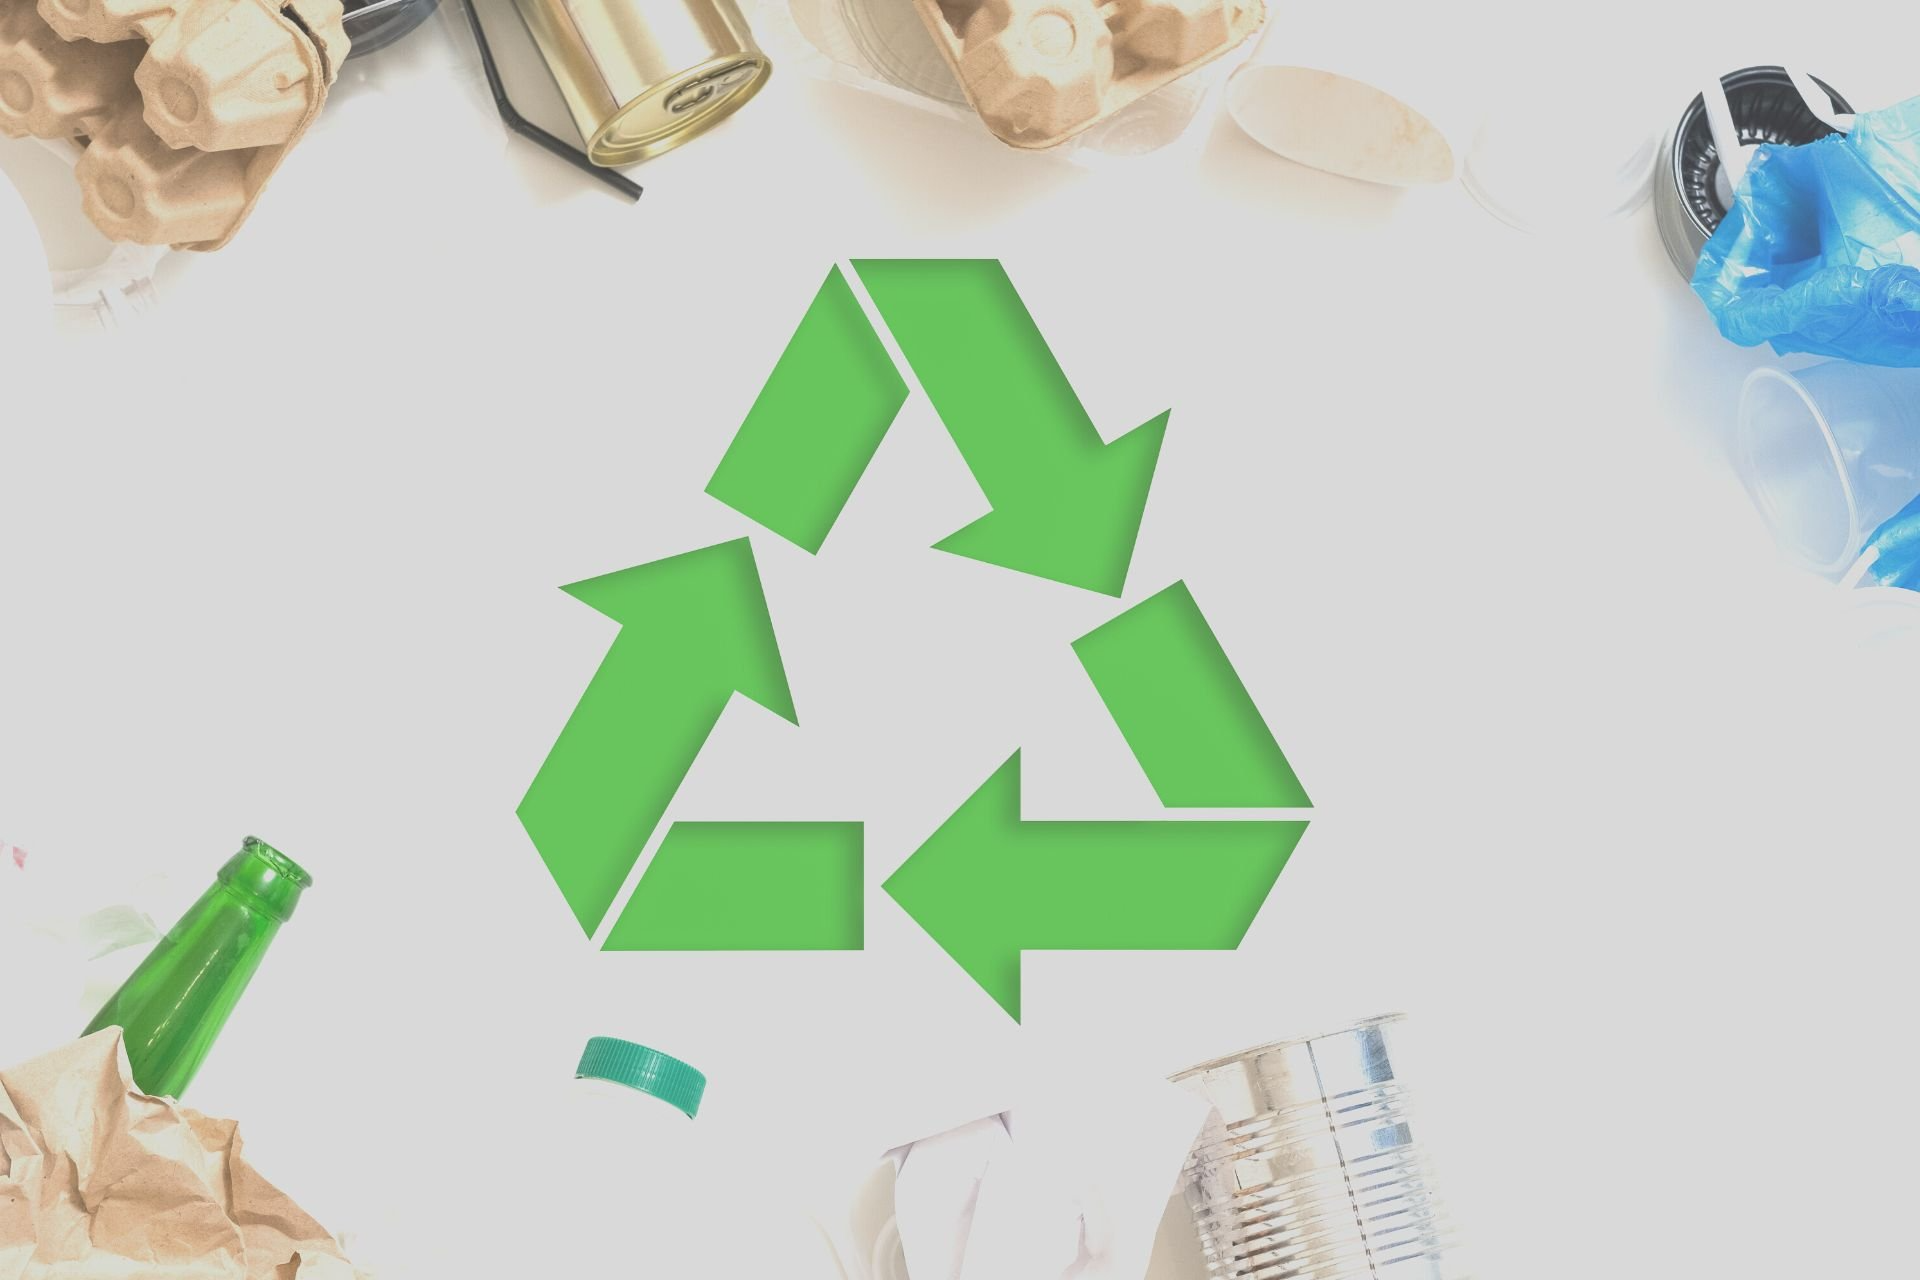 Recyklácia odpadu je prvoradá